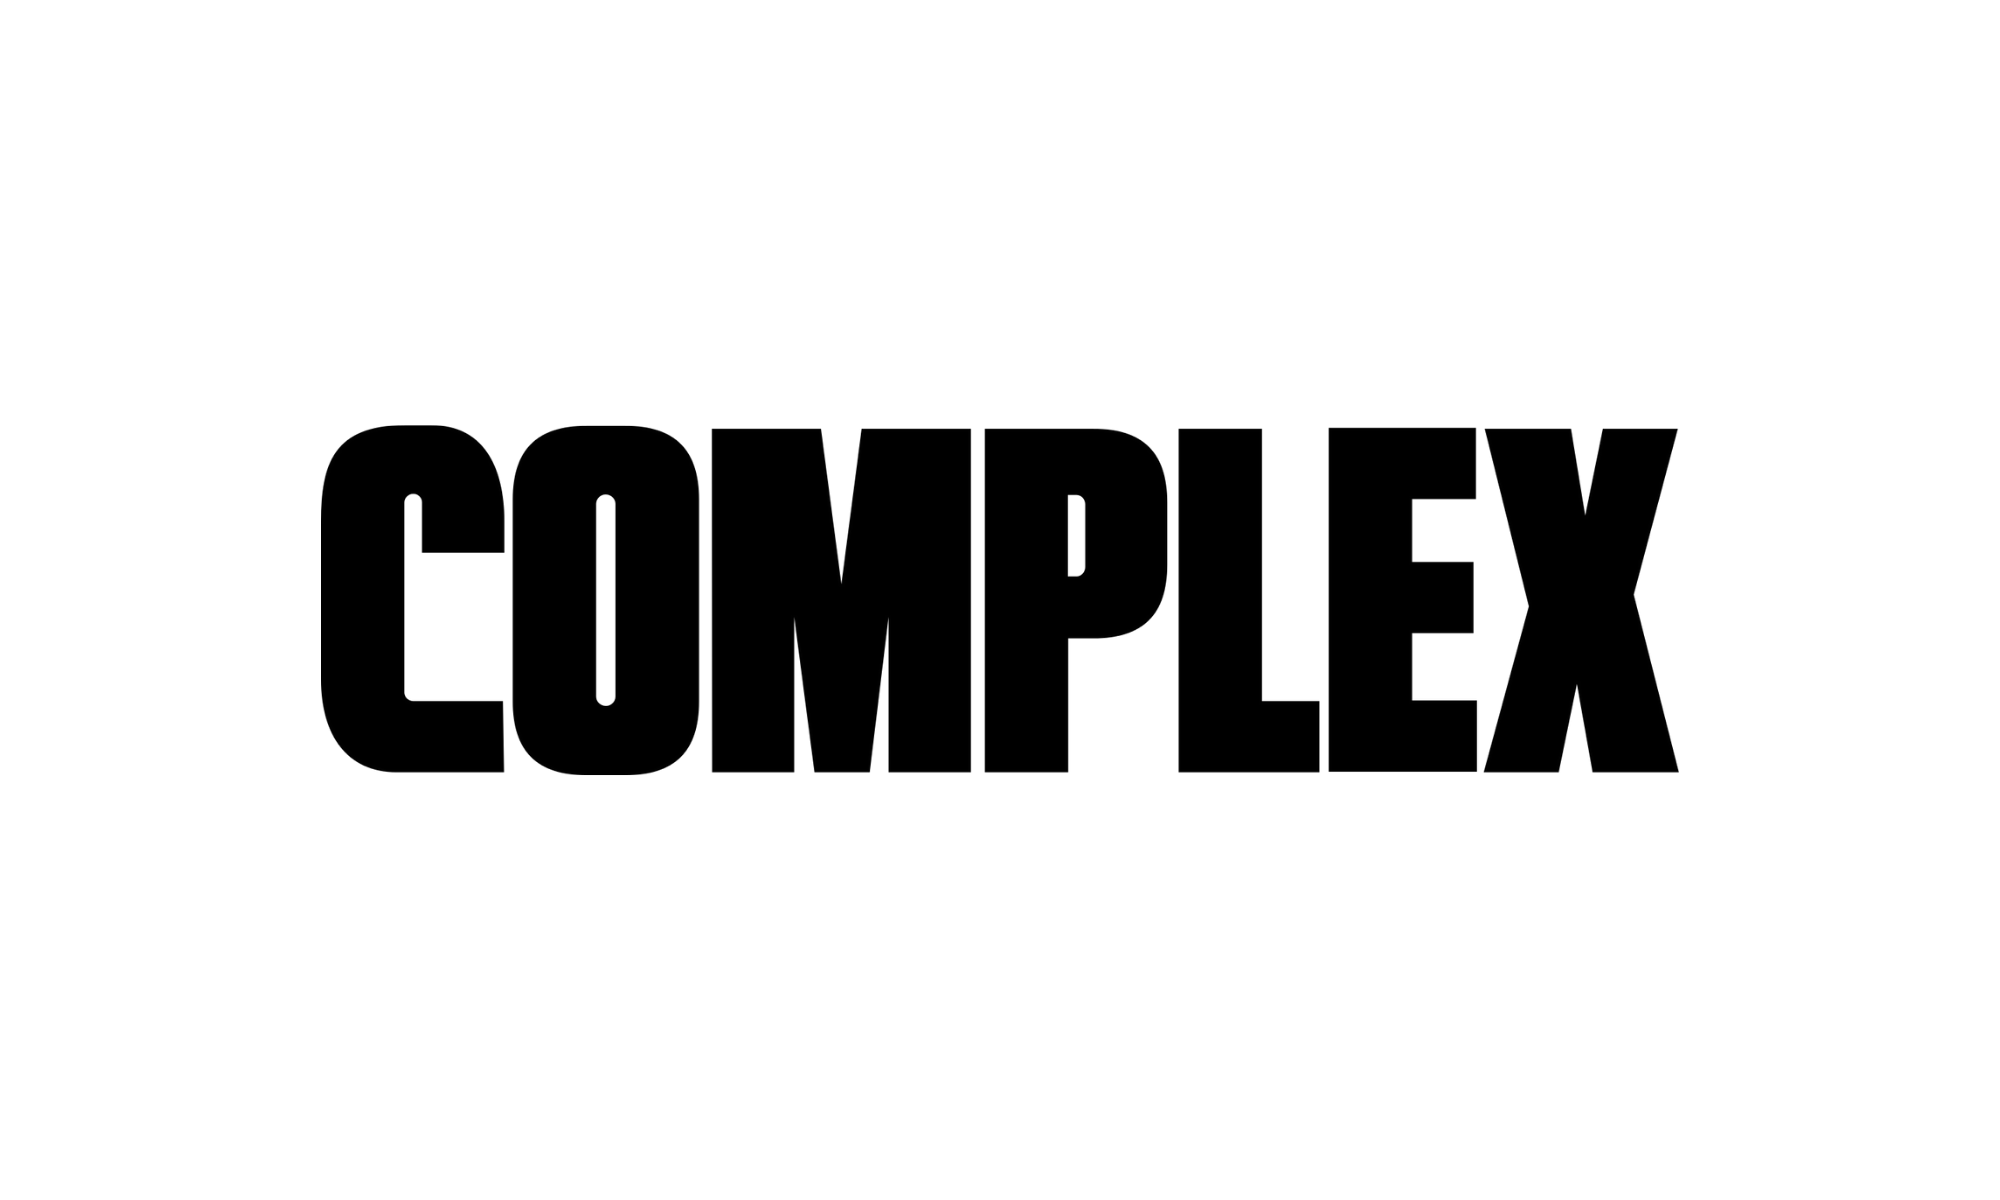 Complex